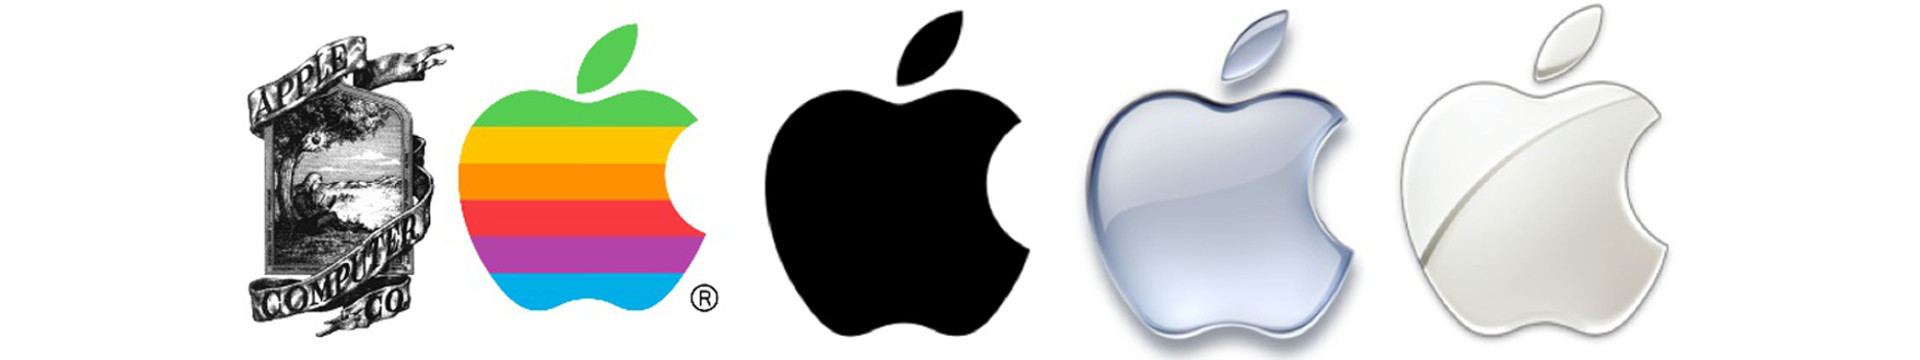 Spektakel rijk Microprocessor Apple registreert oud logo - Chiever